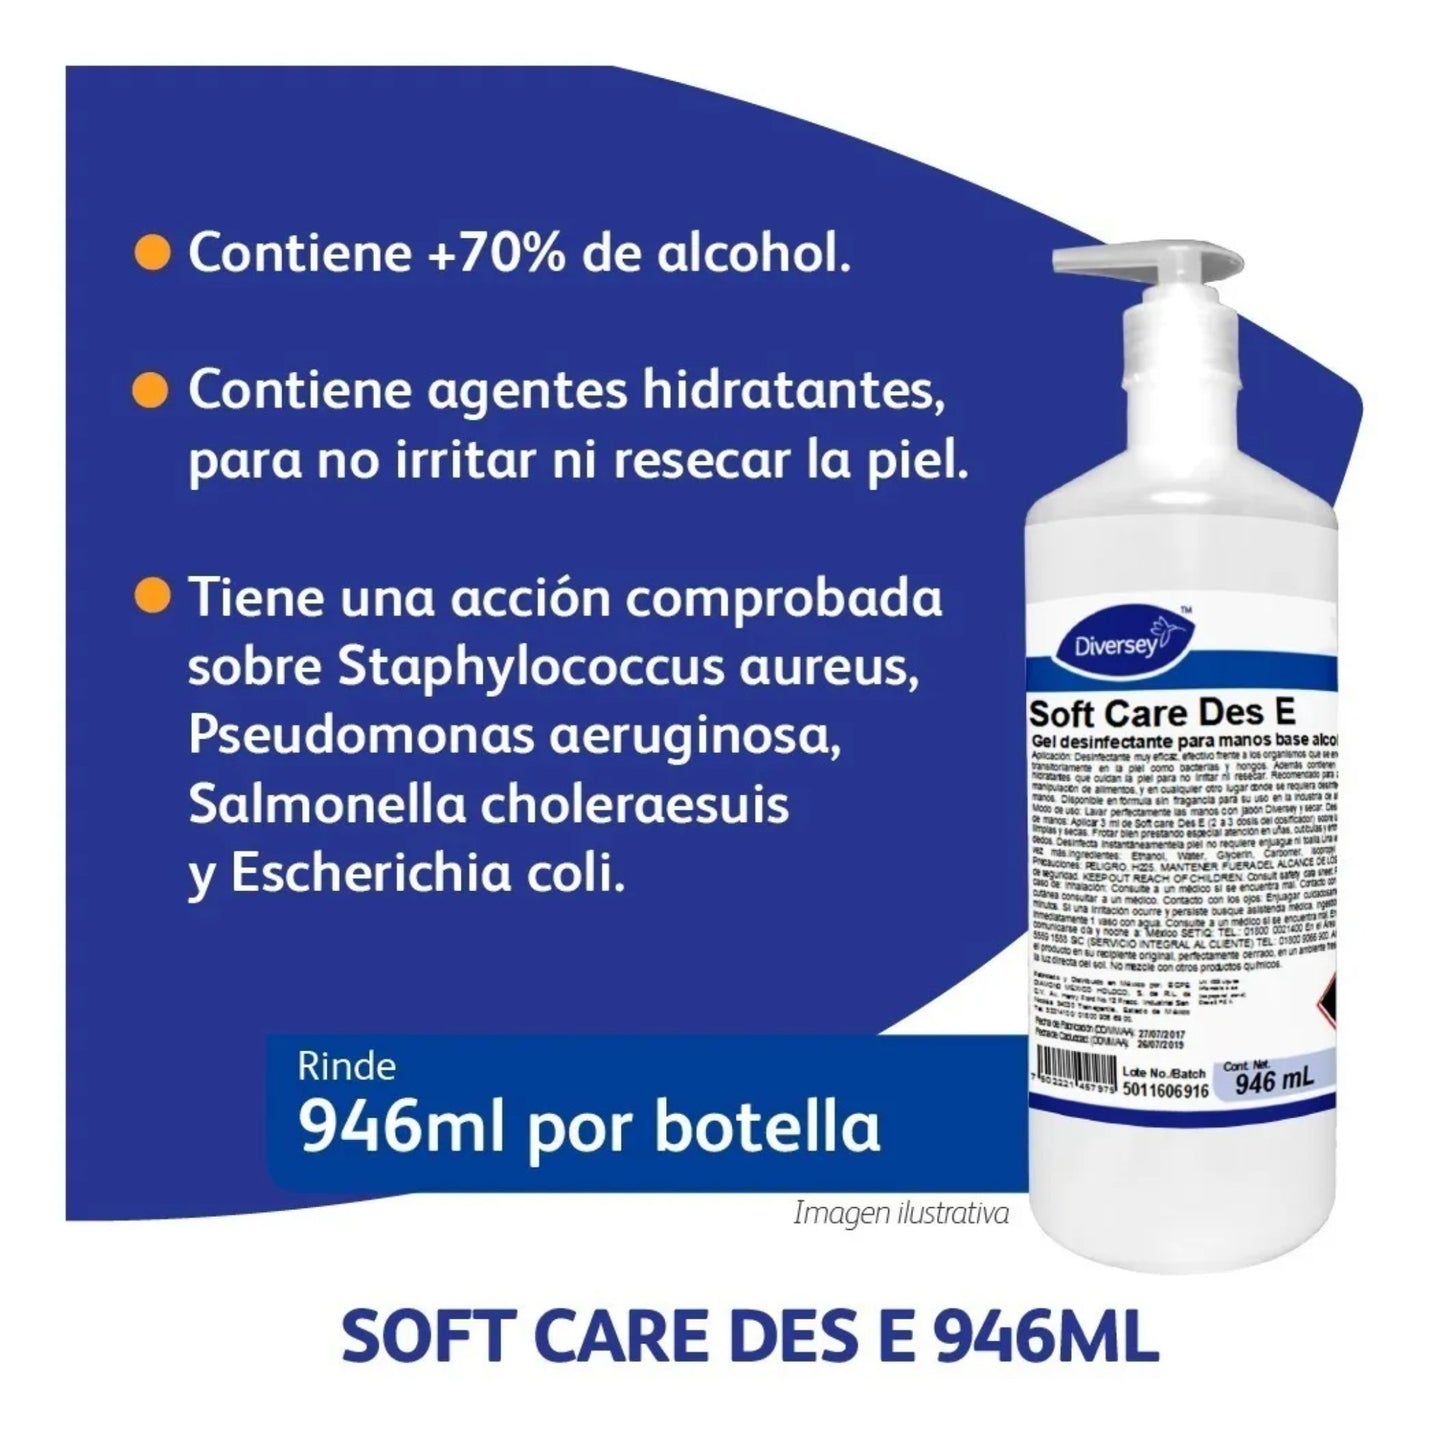 Soft Care Des E Gel Desinfectante - eShop Oficial Diversey México101101305